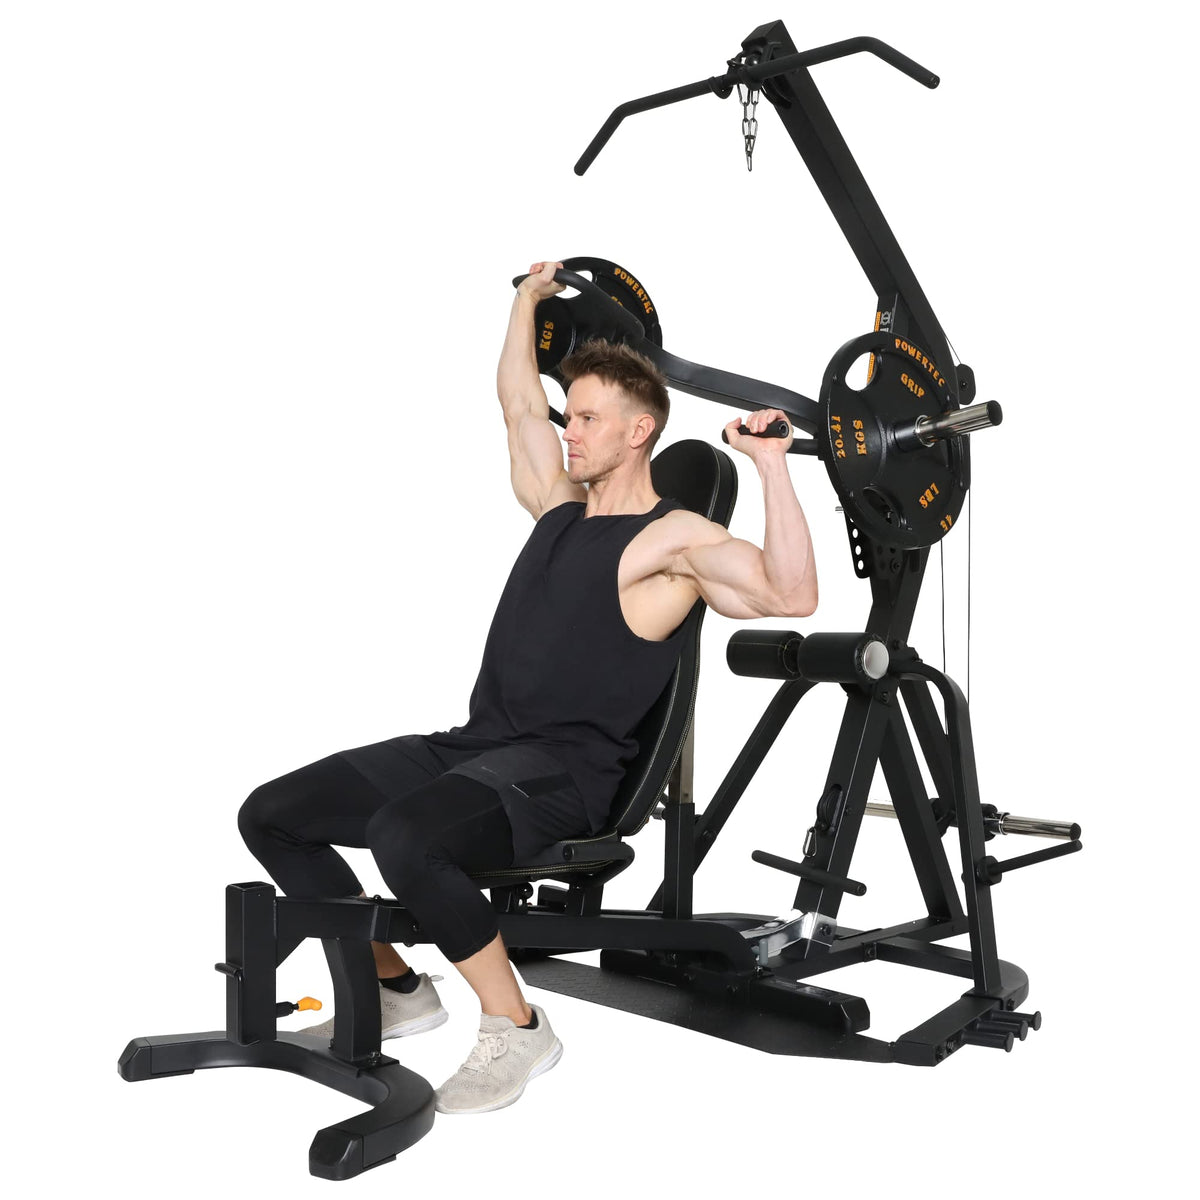 Powertec Fitness Lever Gym Work Bench - Black